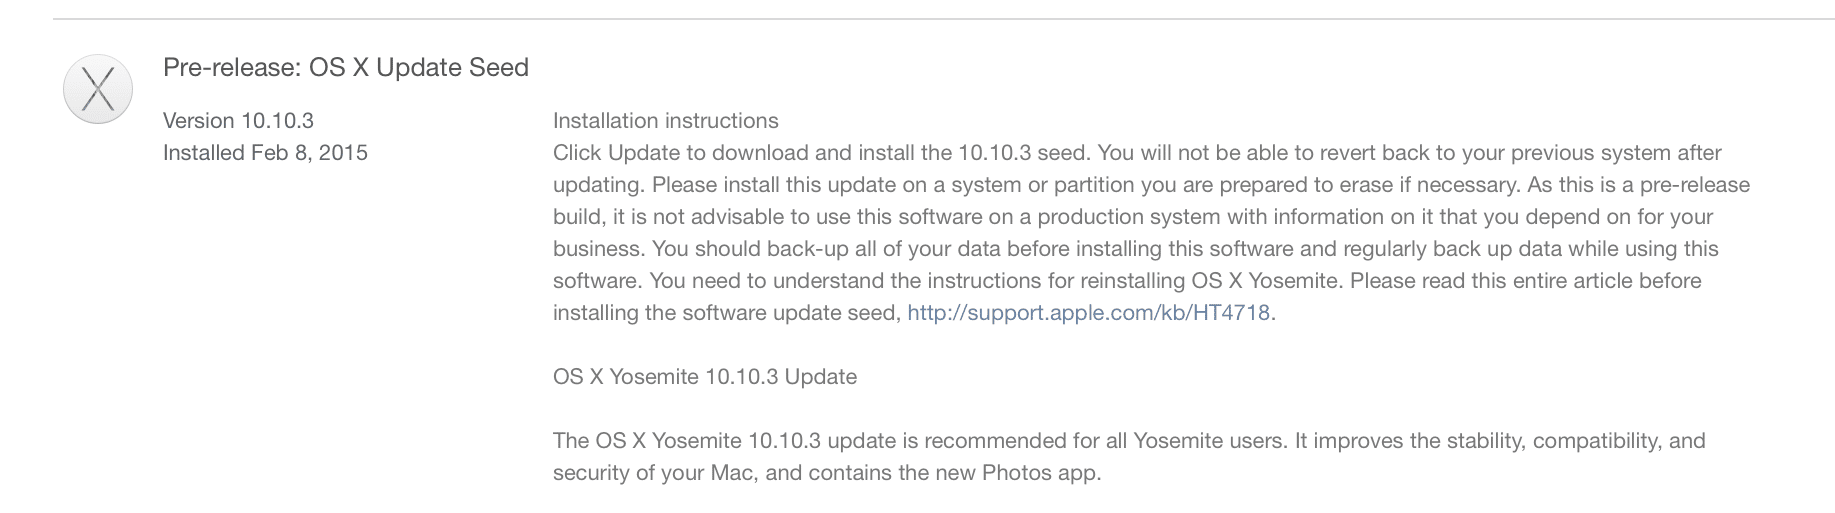 OS X 10.10.3 beta update